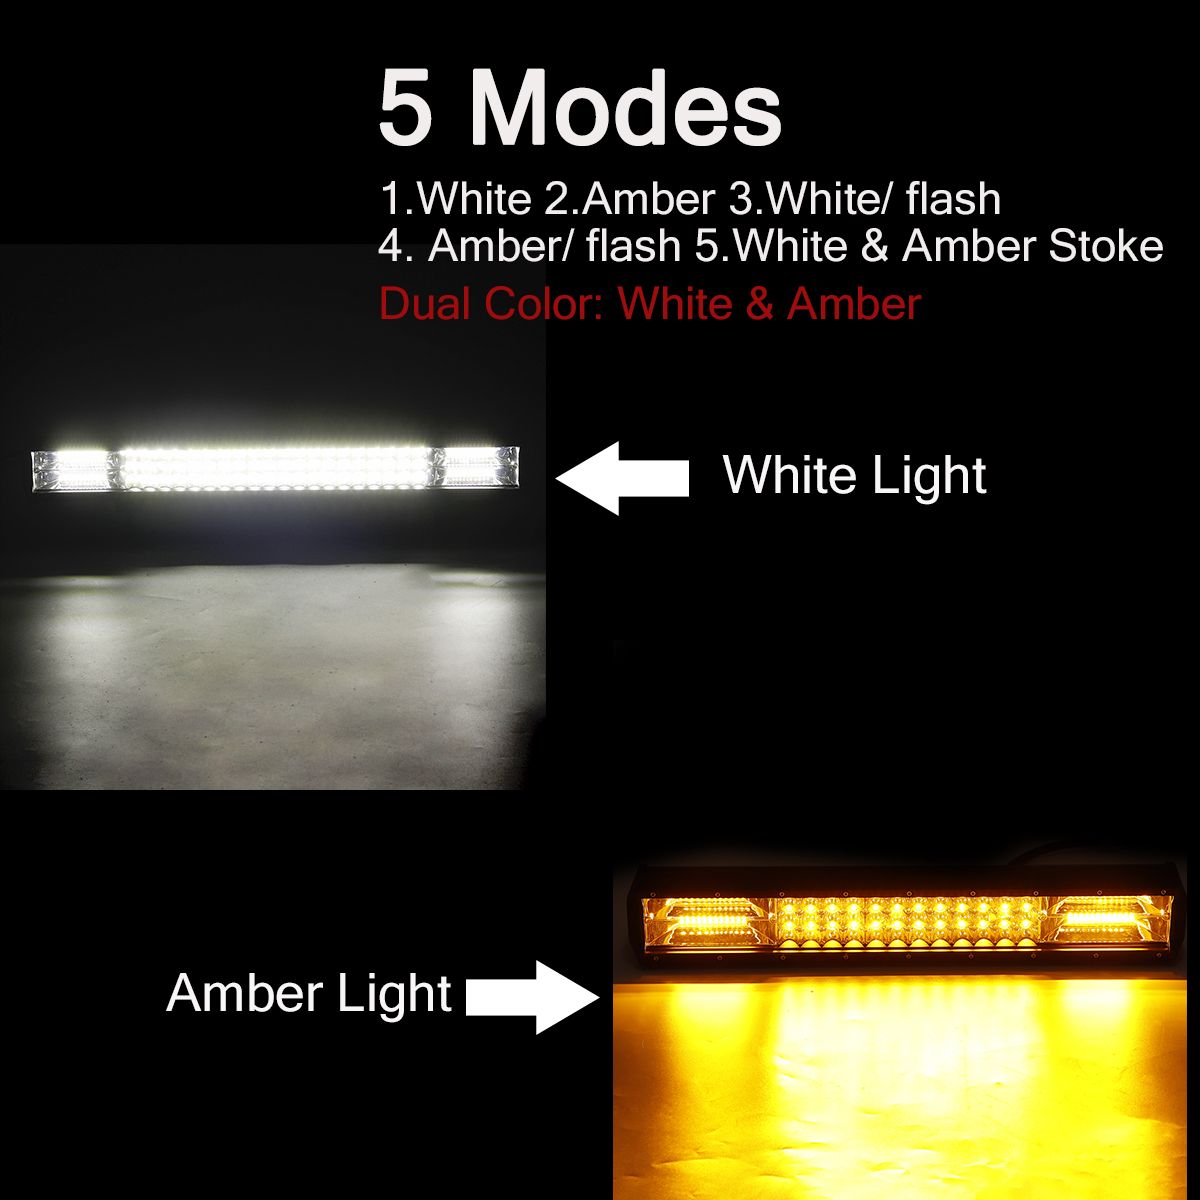 22-Inch-324W-108-LED-Work-Light-Bars-Strobe-Flashing-Lamp-WhiteAmber-For-Off-Road-Car-Truck-4WD-Trai-1596983